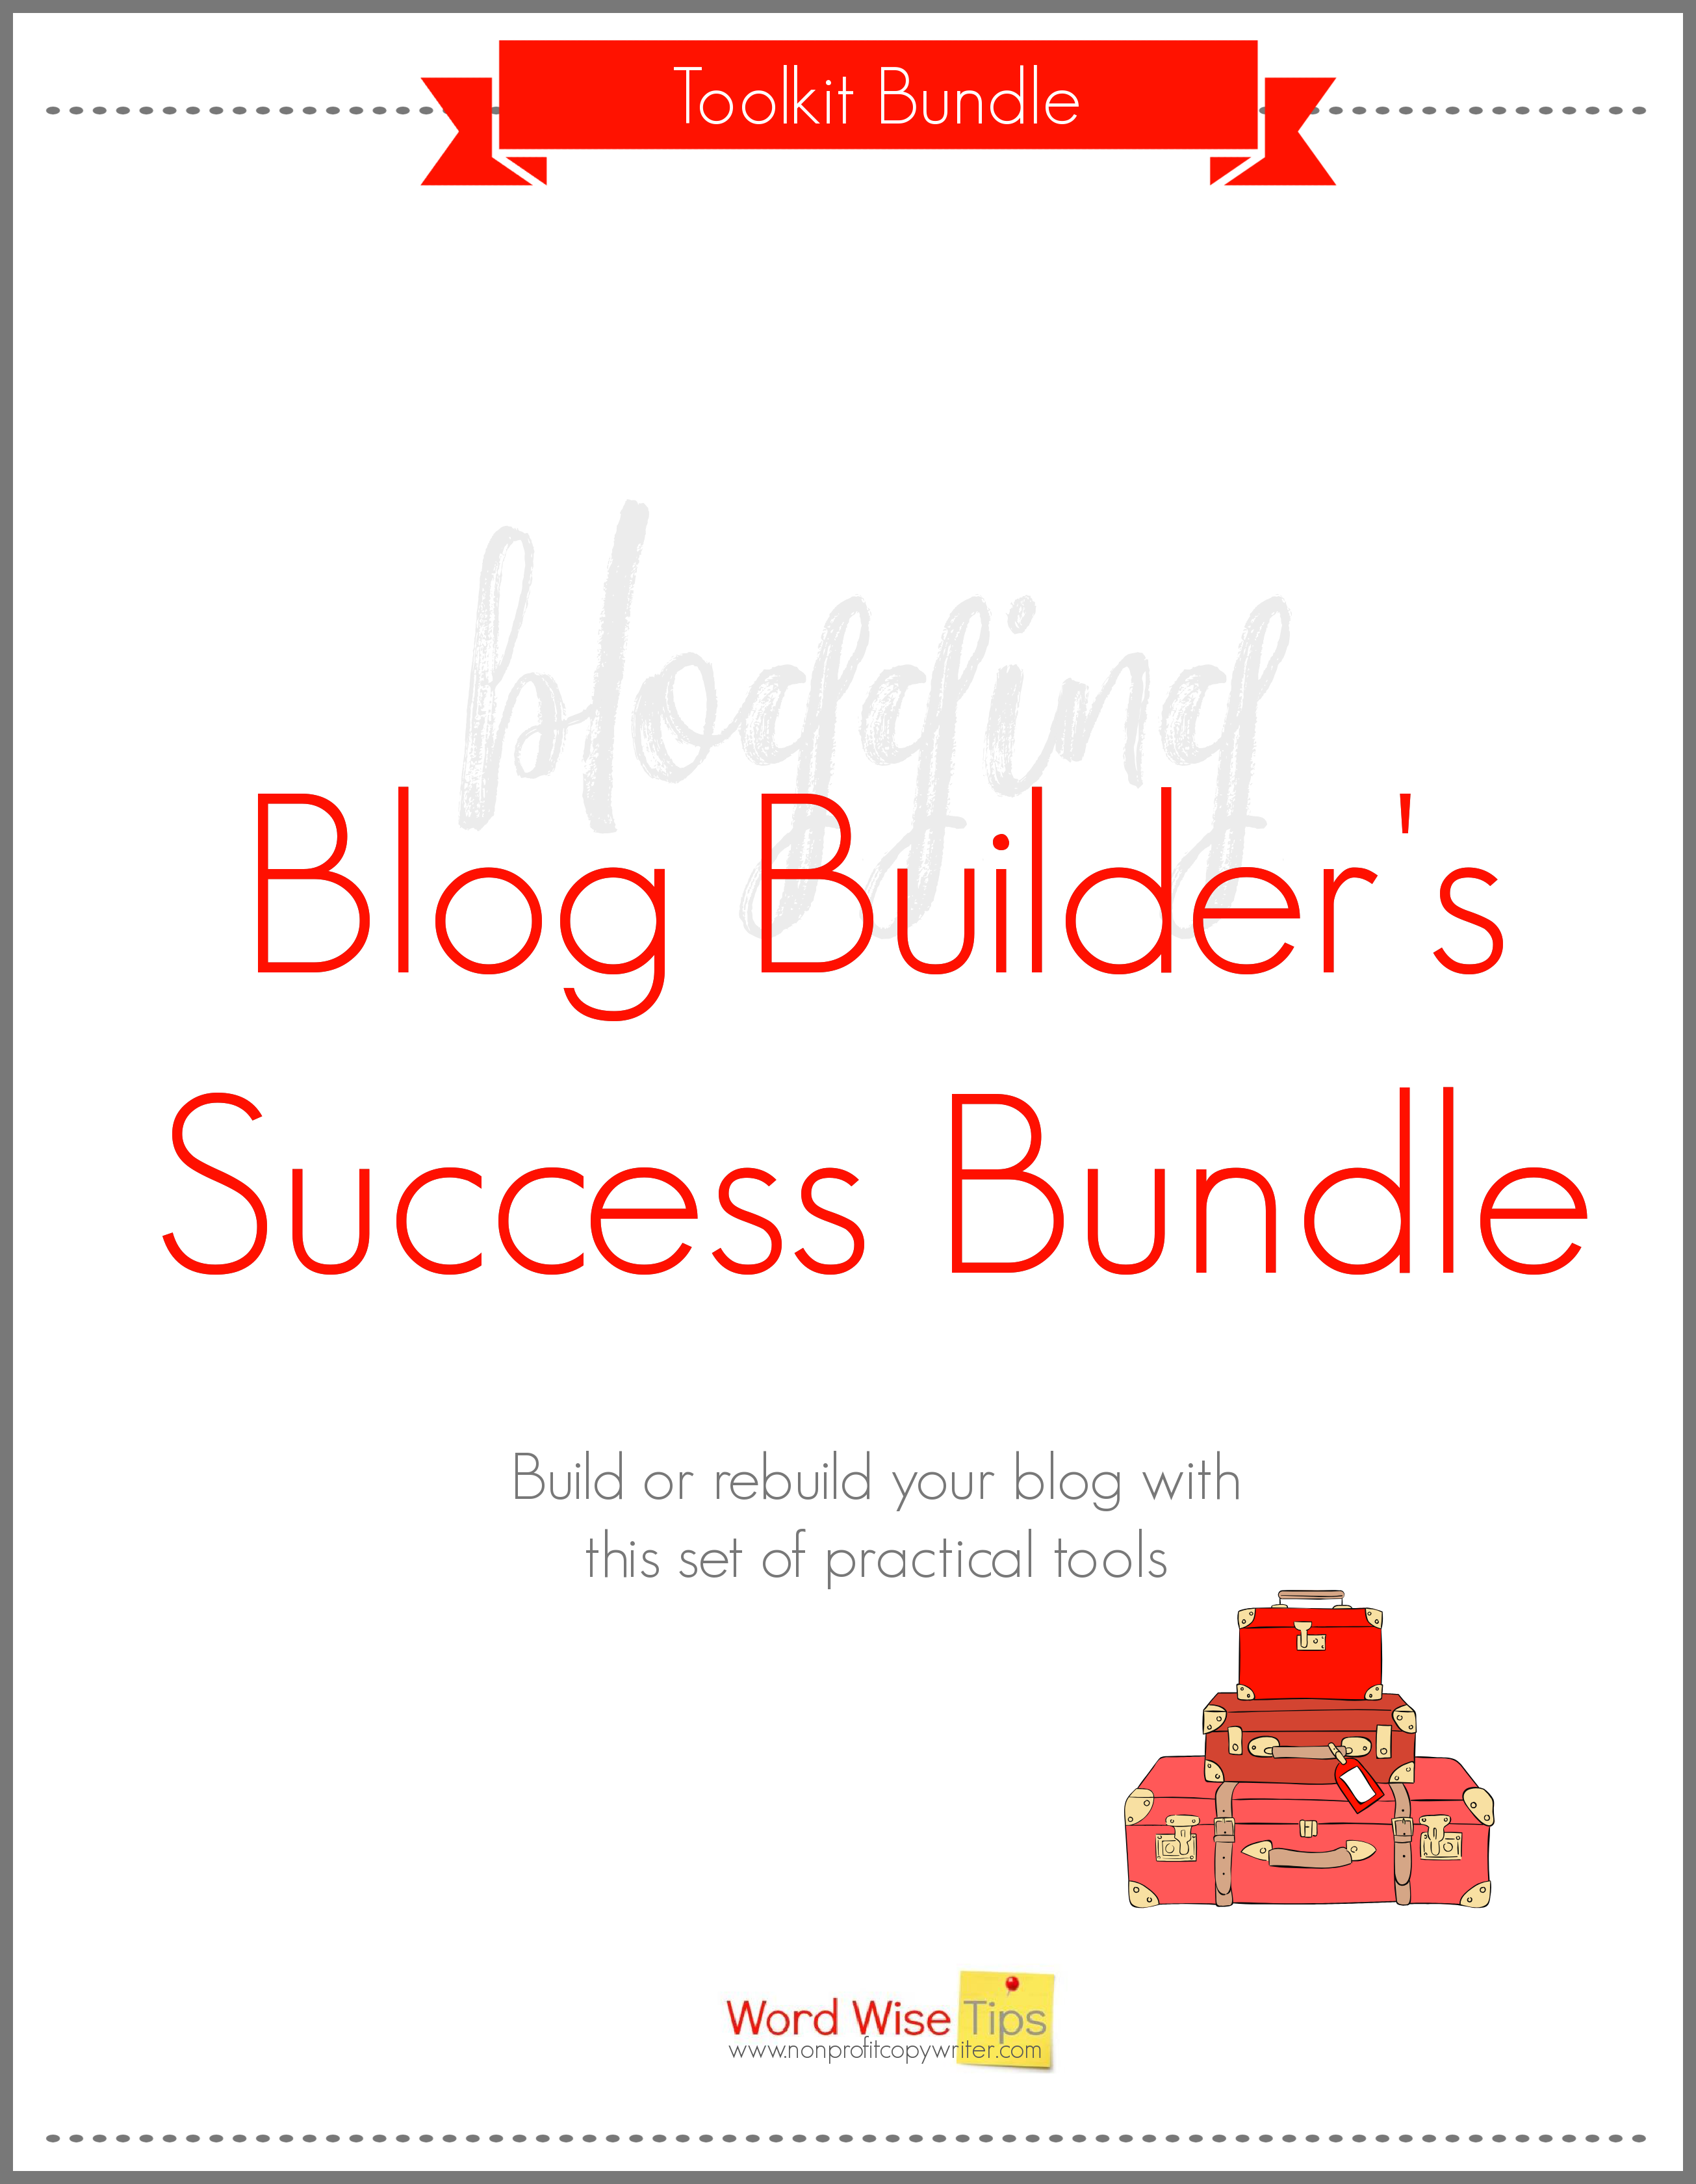 Blog Builder's Success Bundle with WOrd Wise at Nonprofit Copywriter #blogging #printables